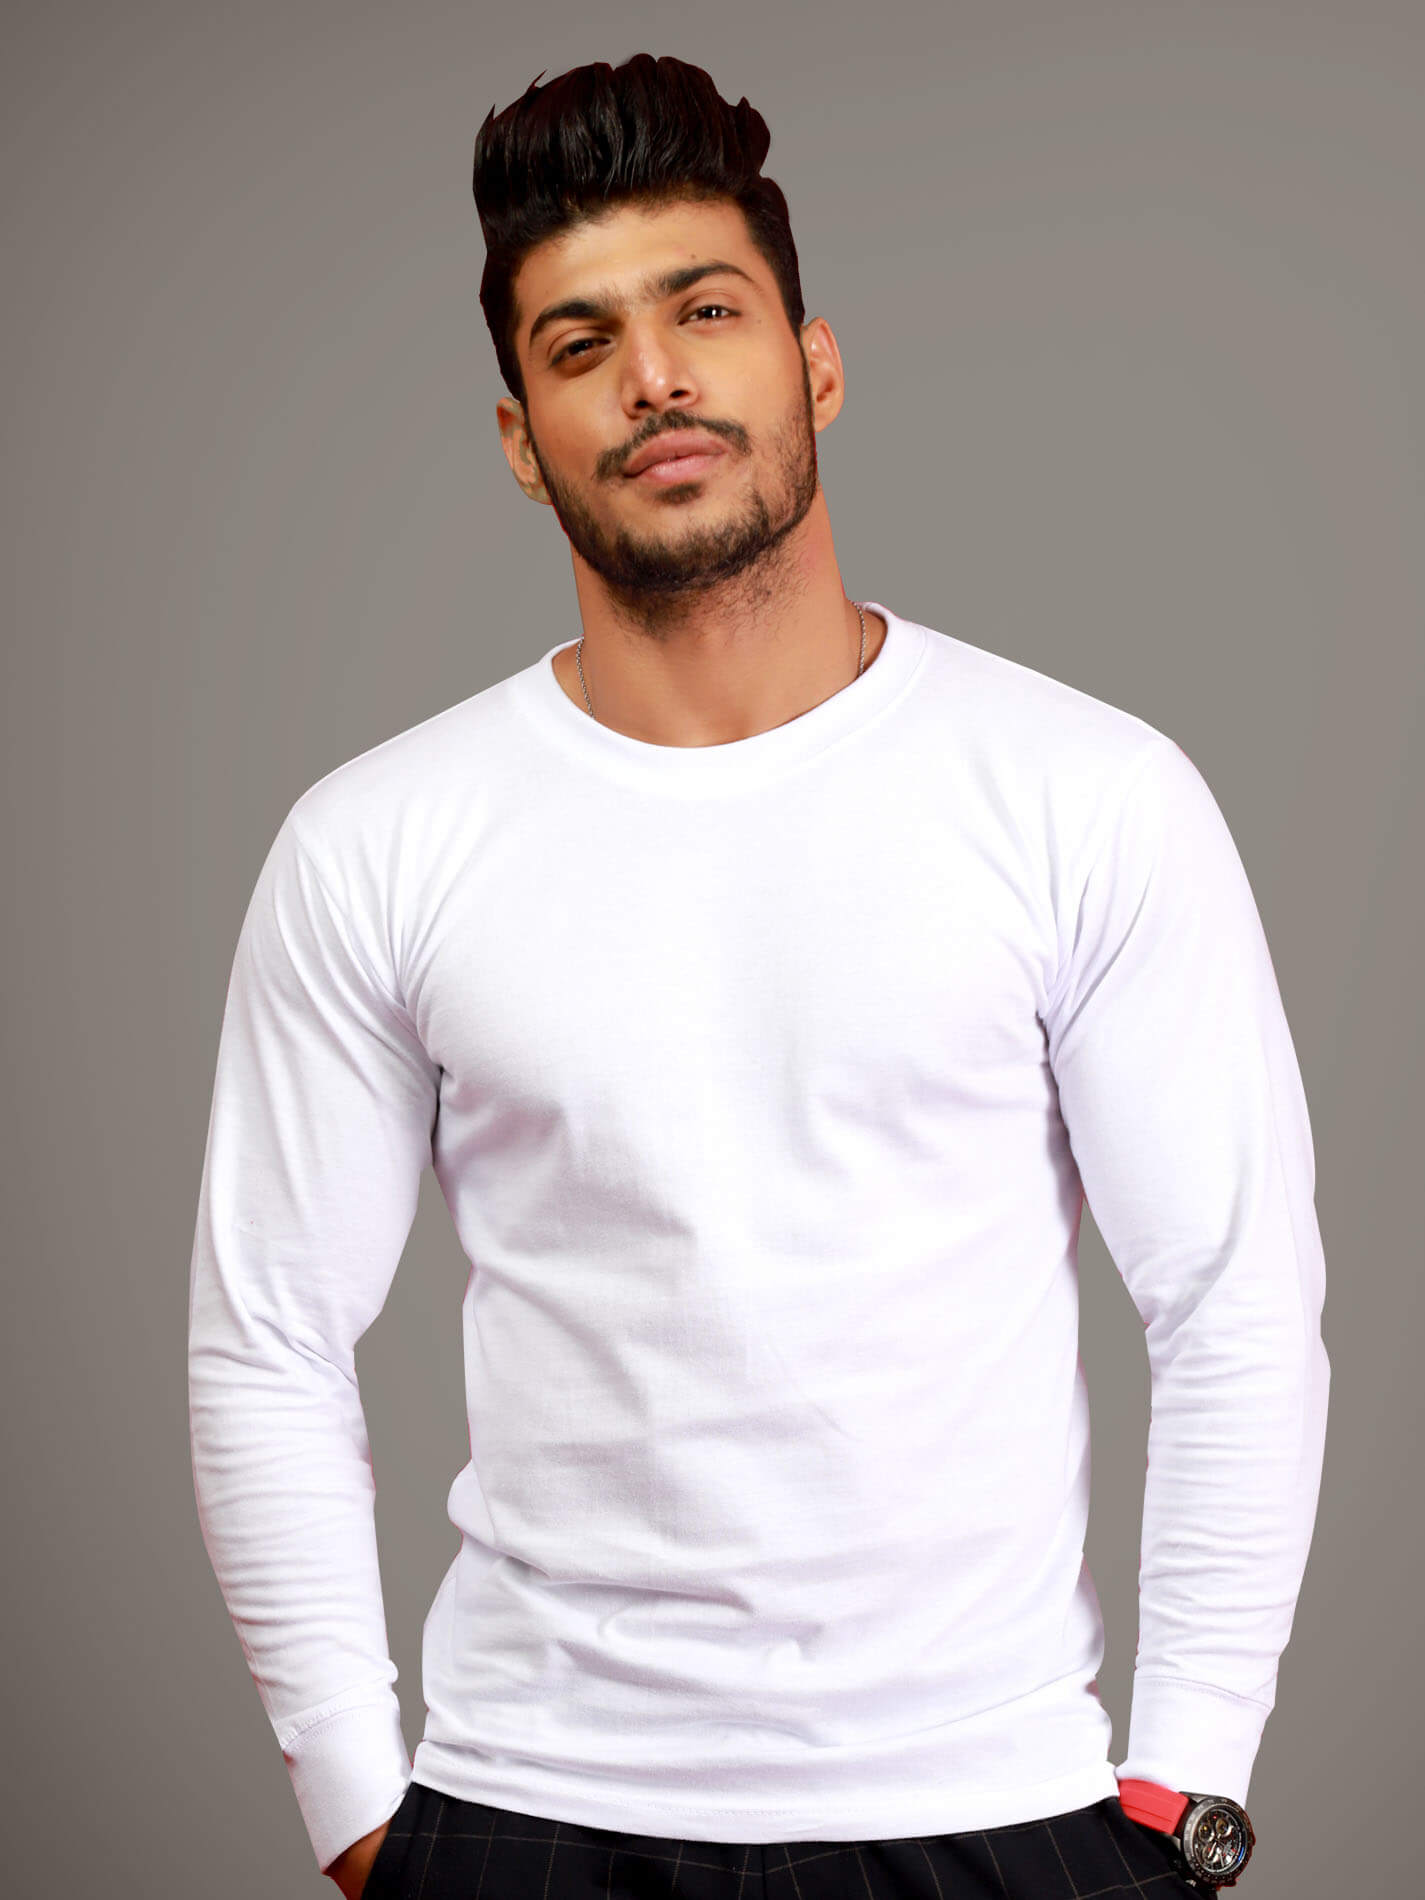 https://stylewear.us/wp-content/uploads/2021/06/White-Long-Sleeves-T-Shirt-1.jpg